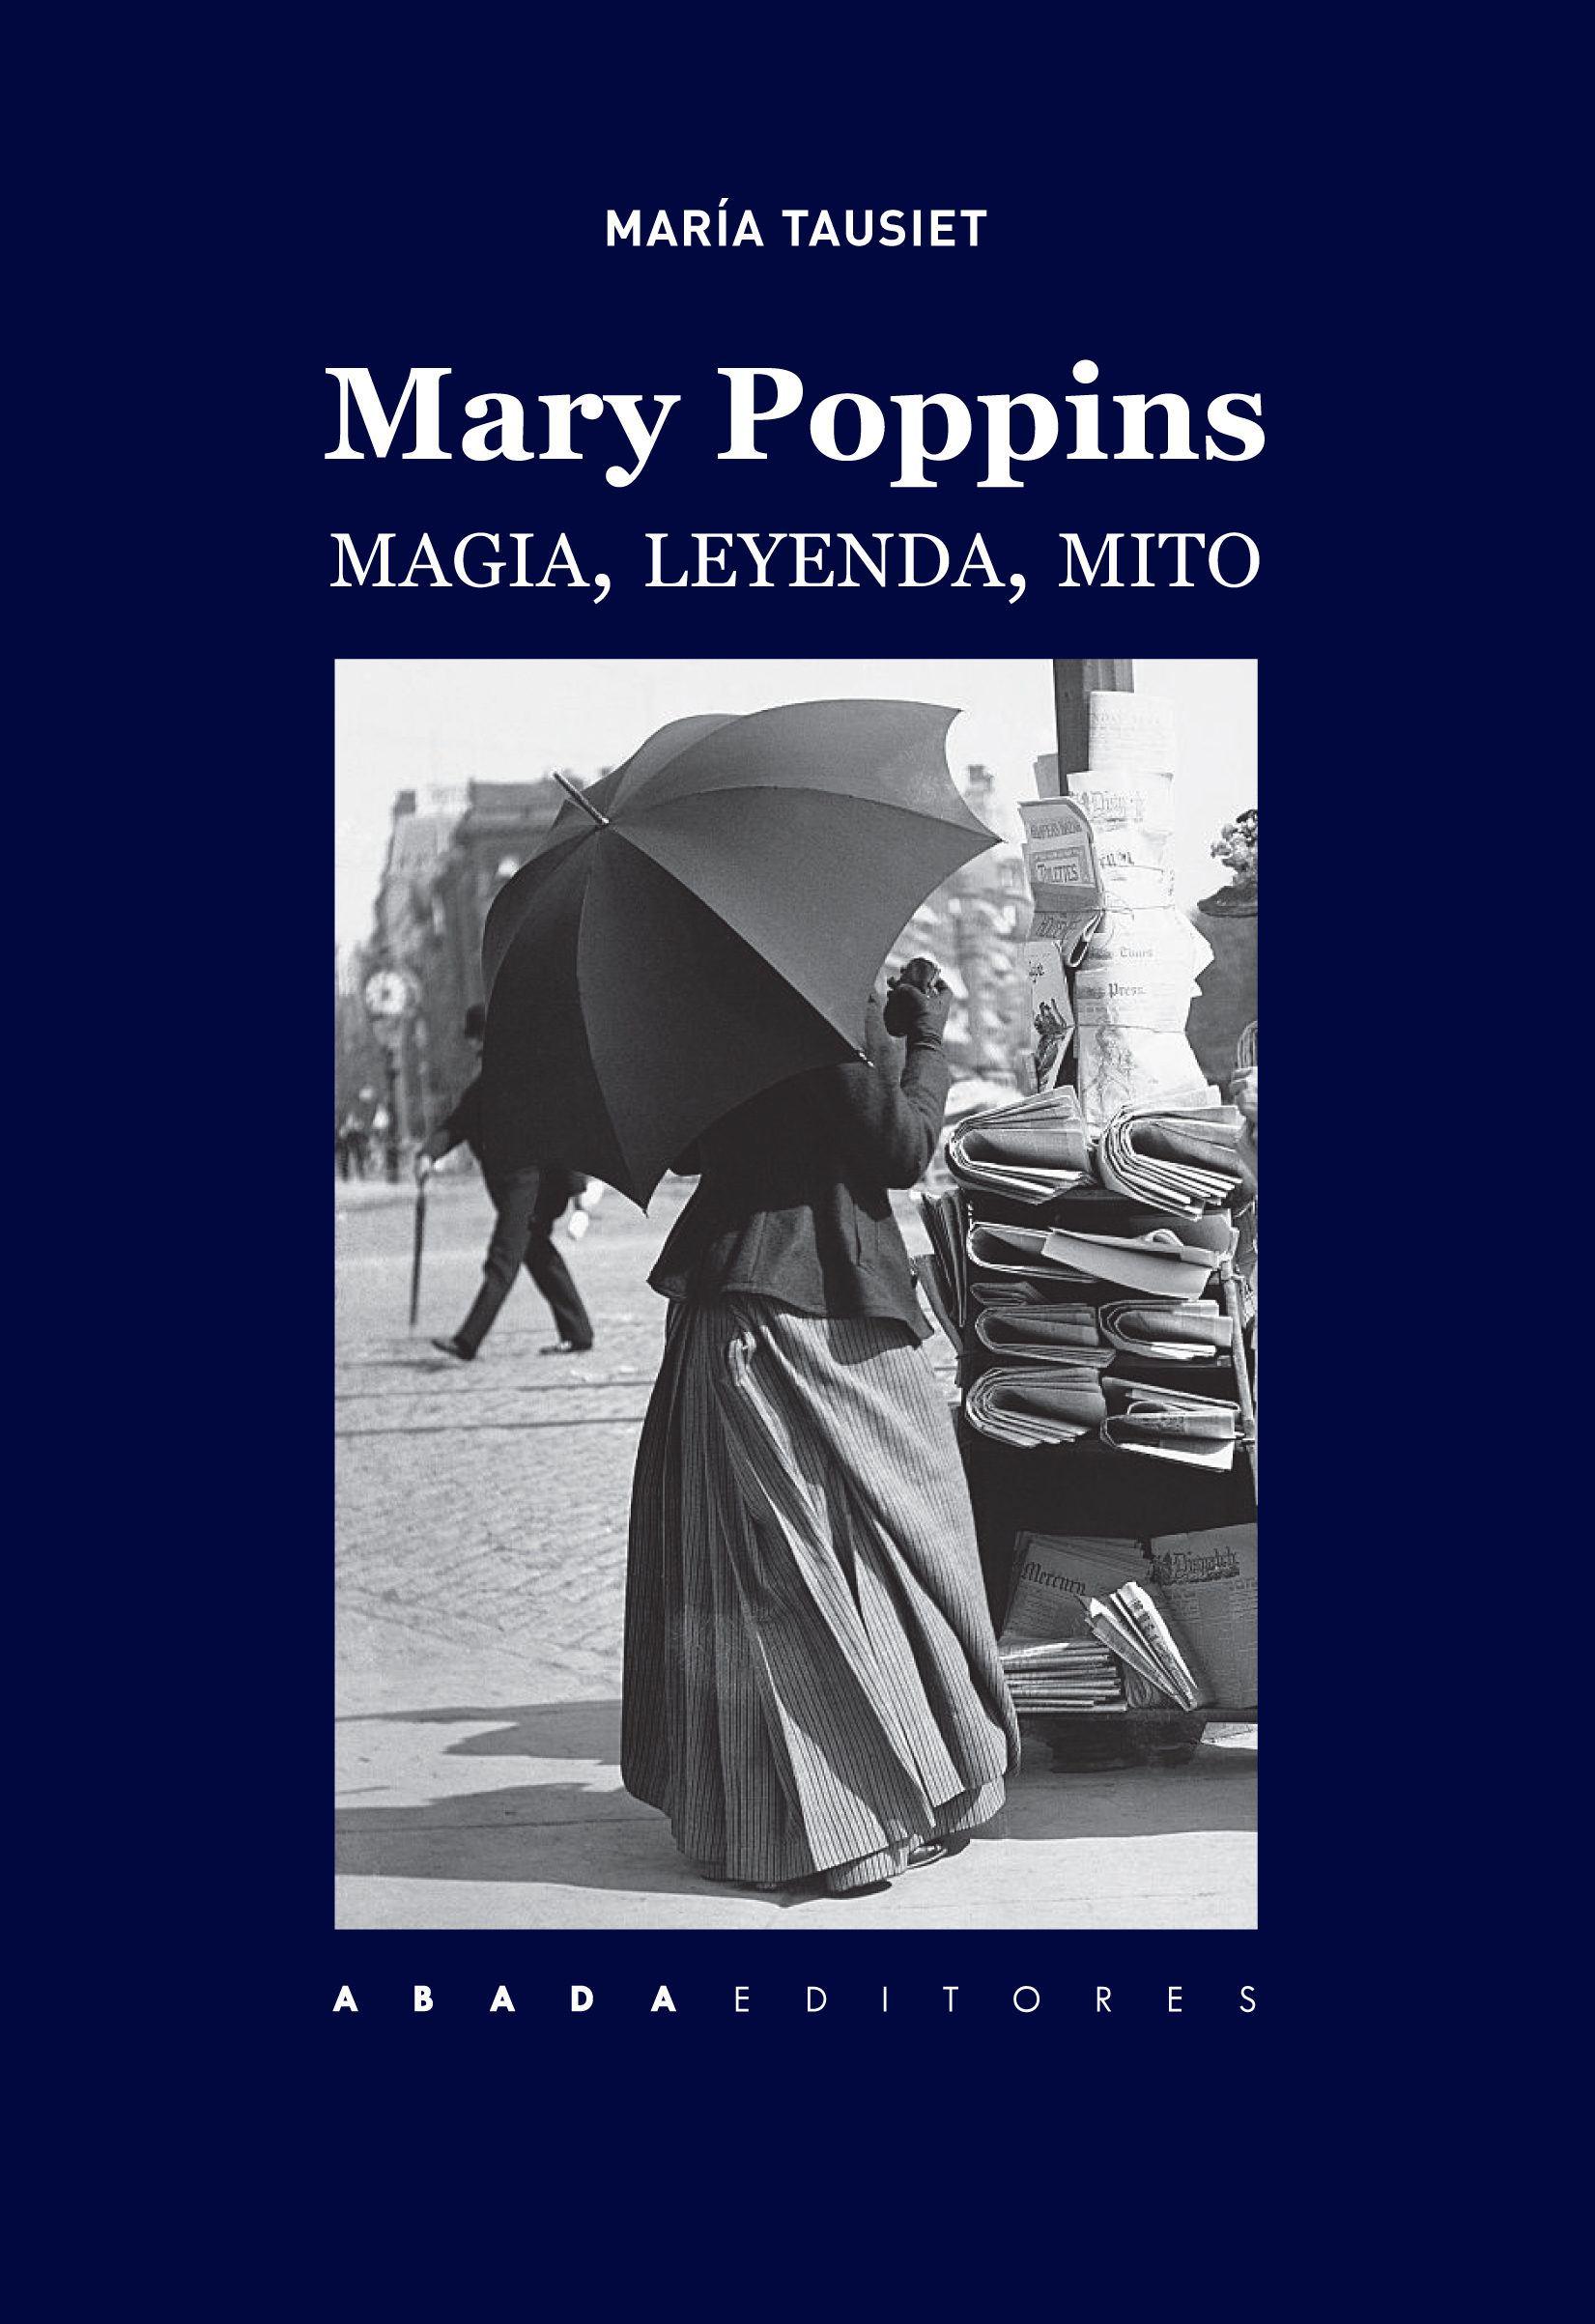 Portada del libro MARY POPPINS. Magia, leyenda, mito